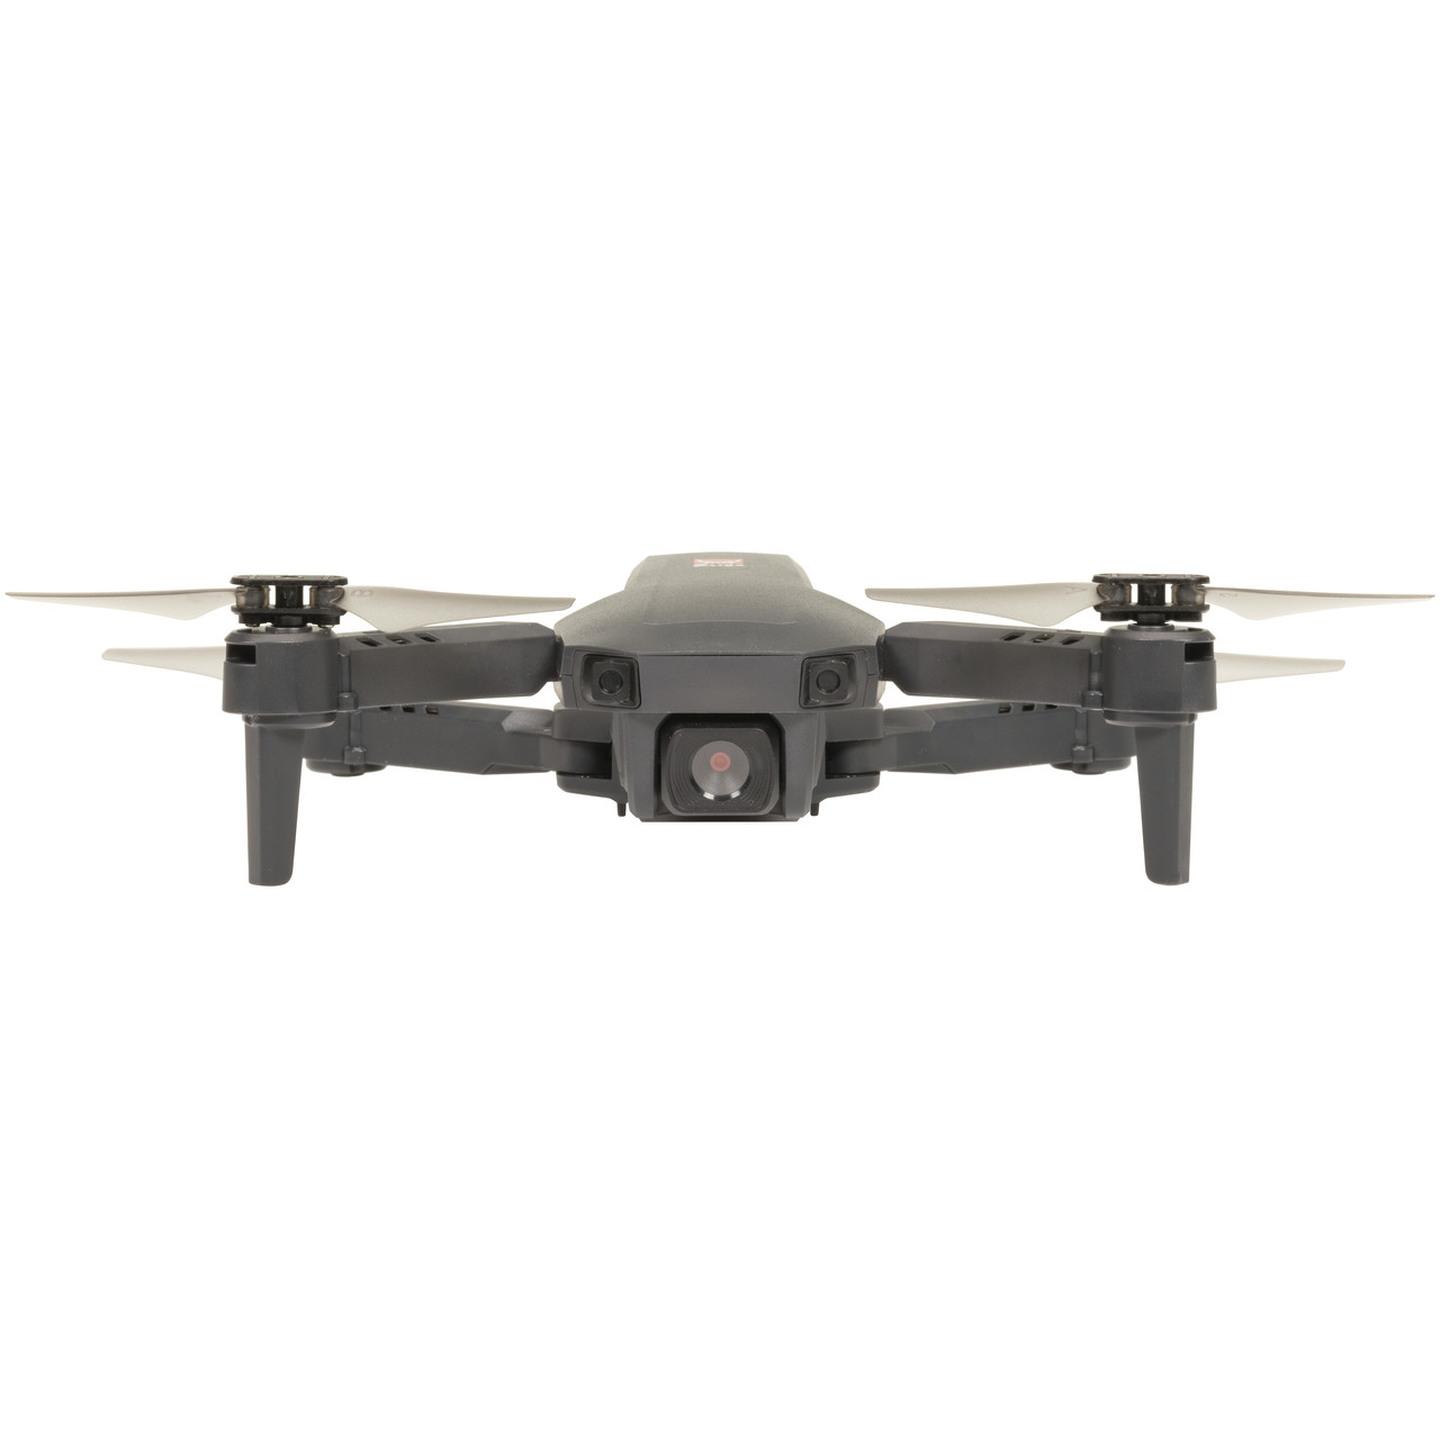 Bugs R/C Mini Drone with 1080p Camera